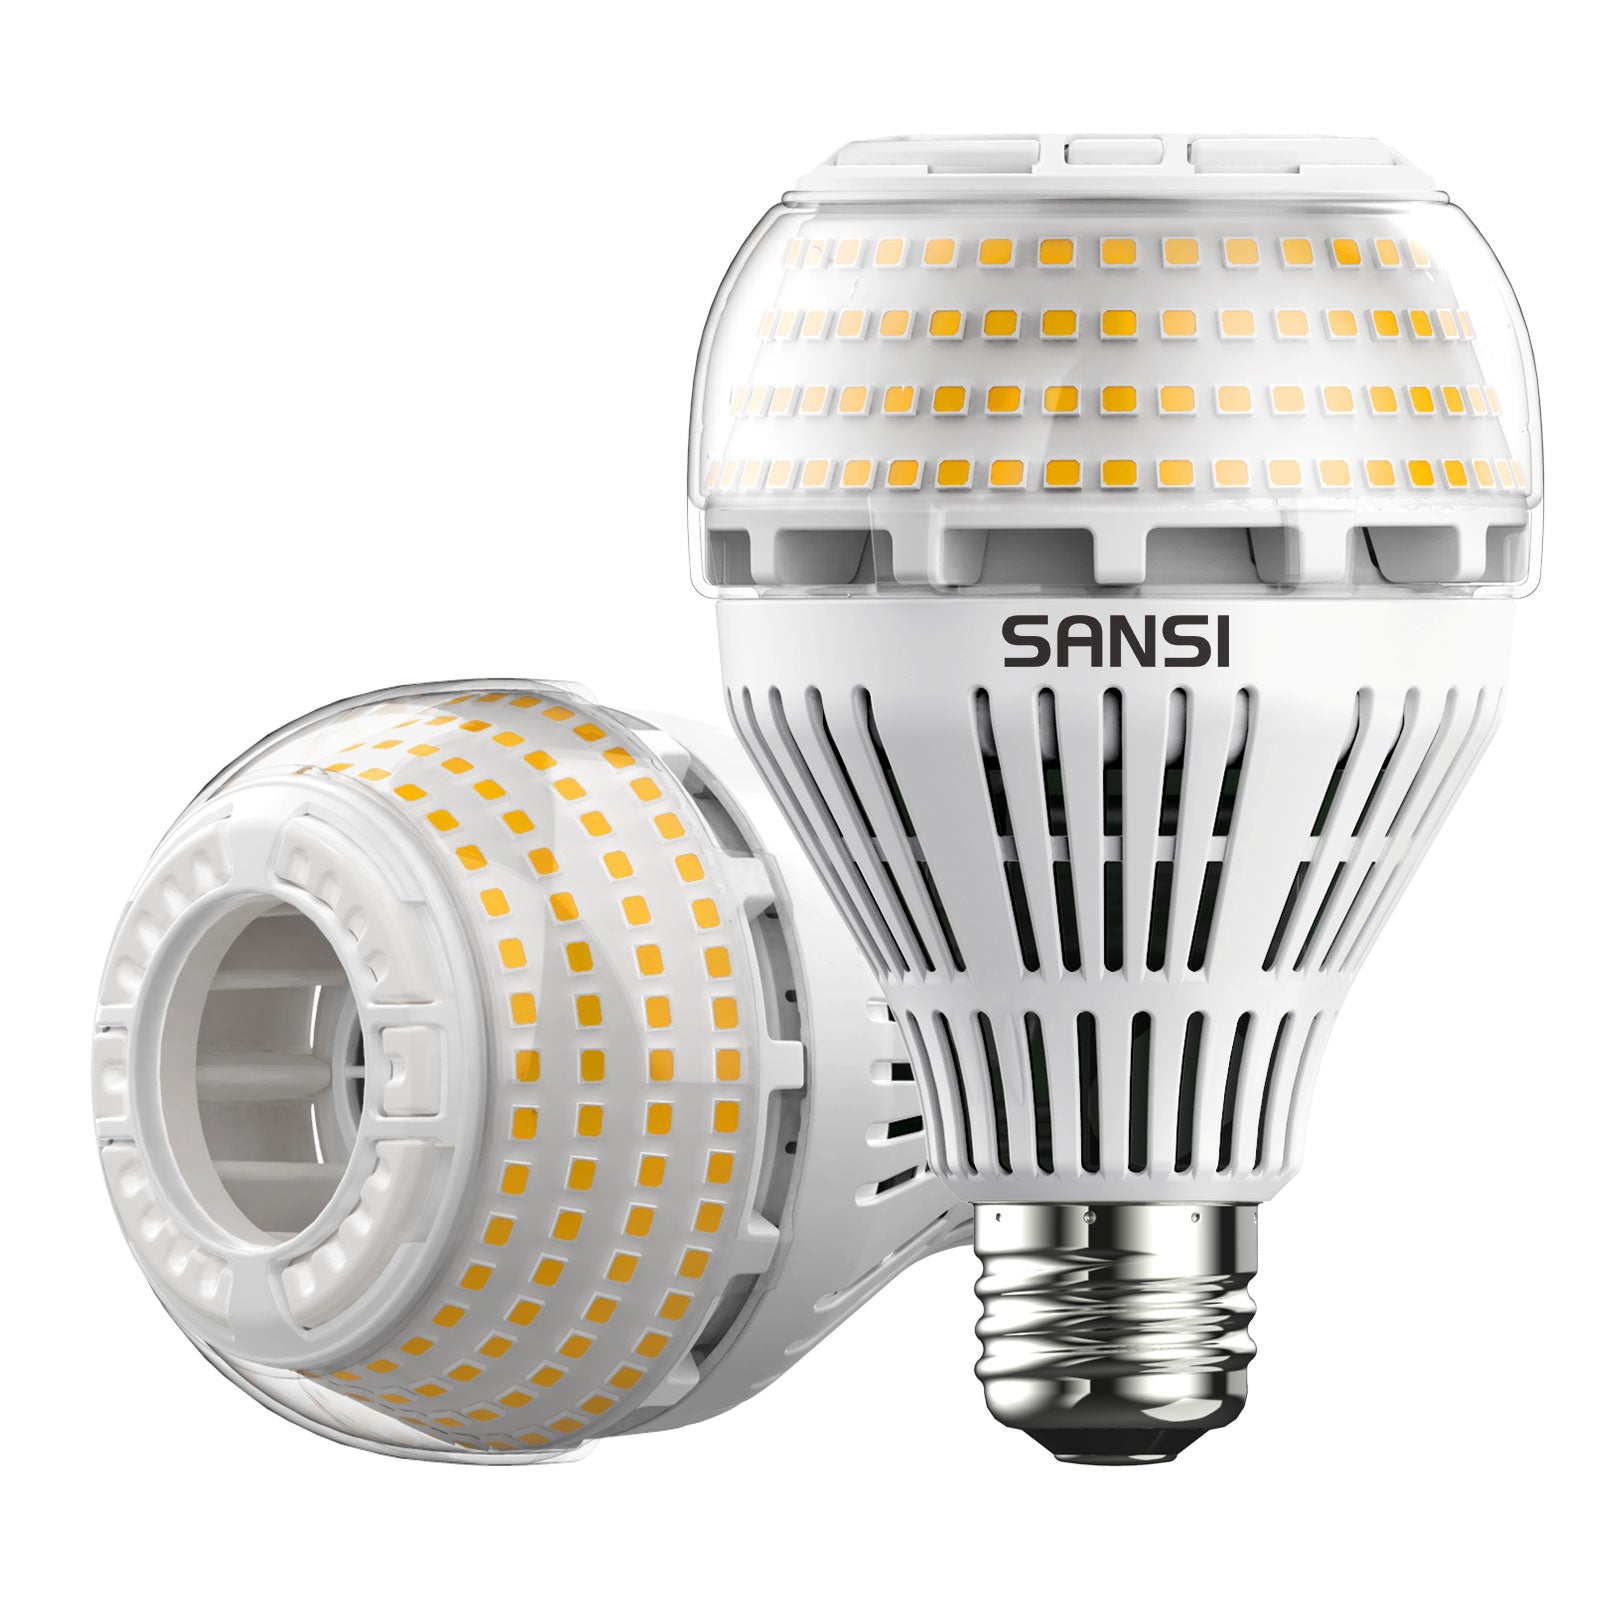 A21 22W LED 3000K Light Bulb(2-pack)